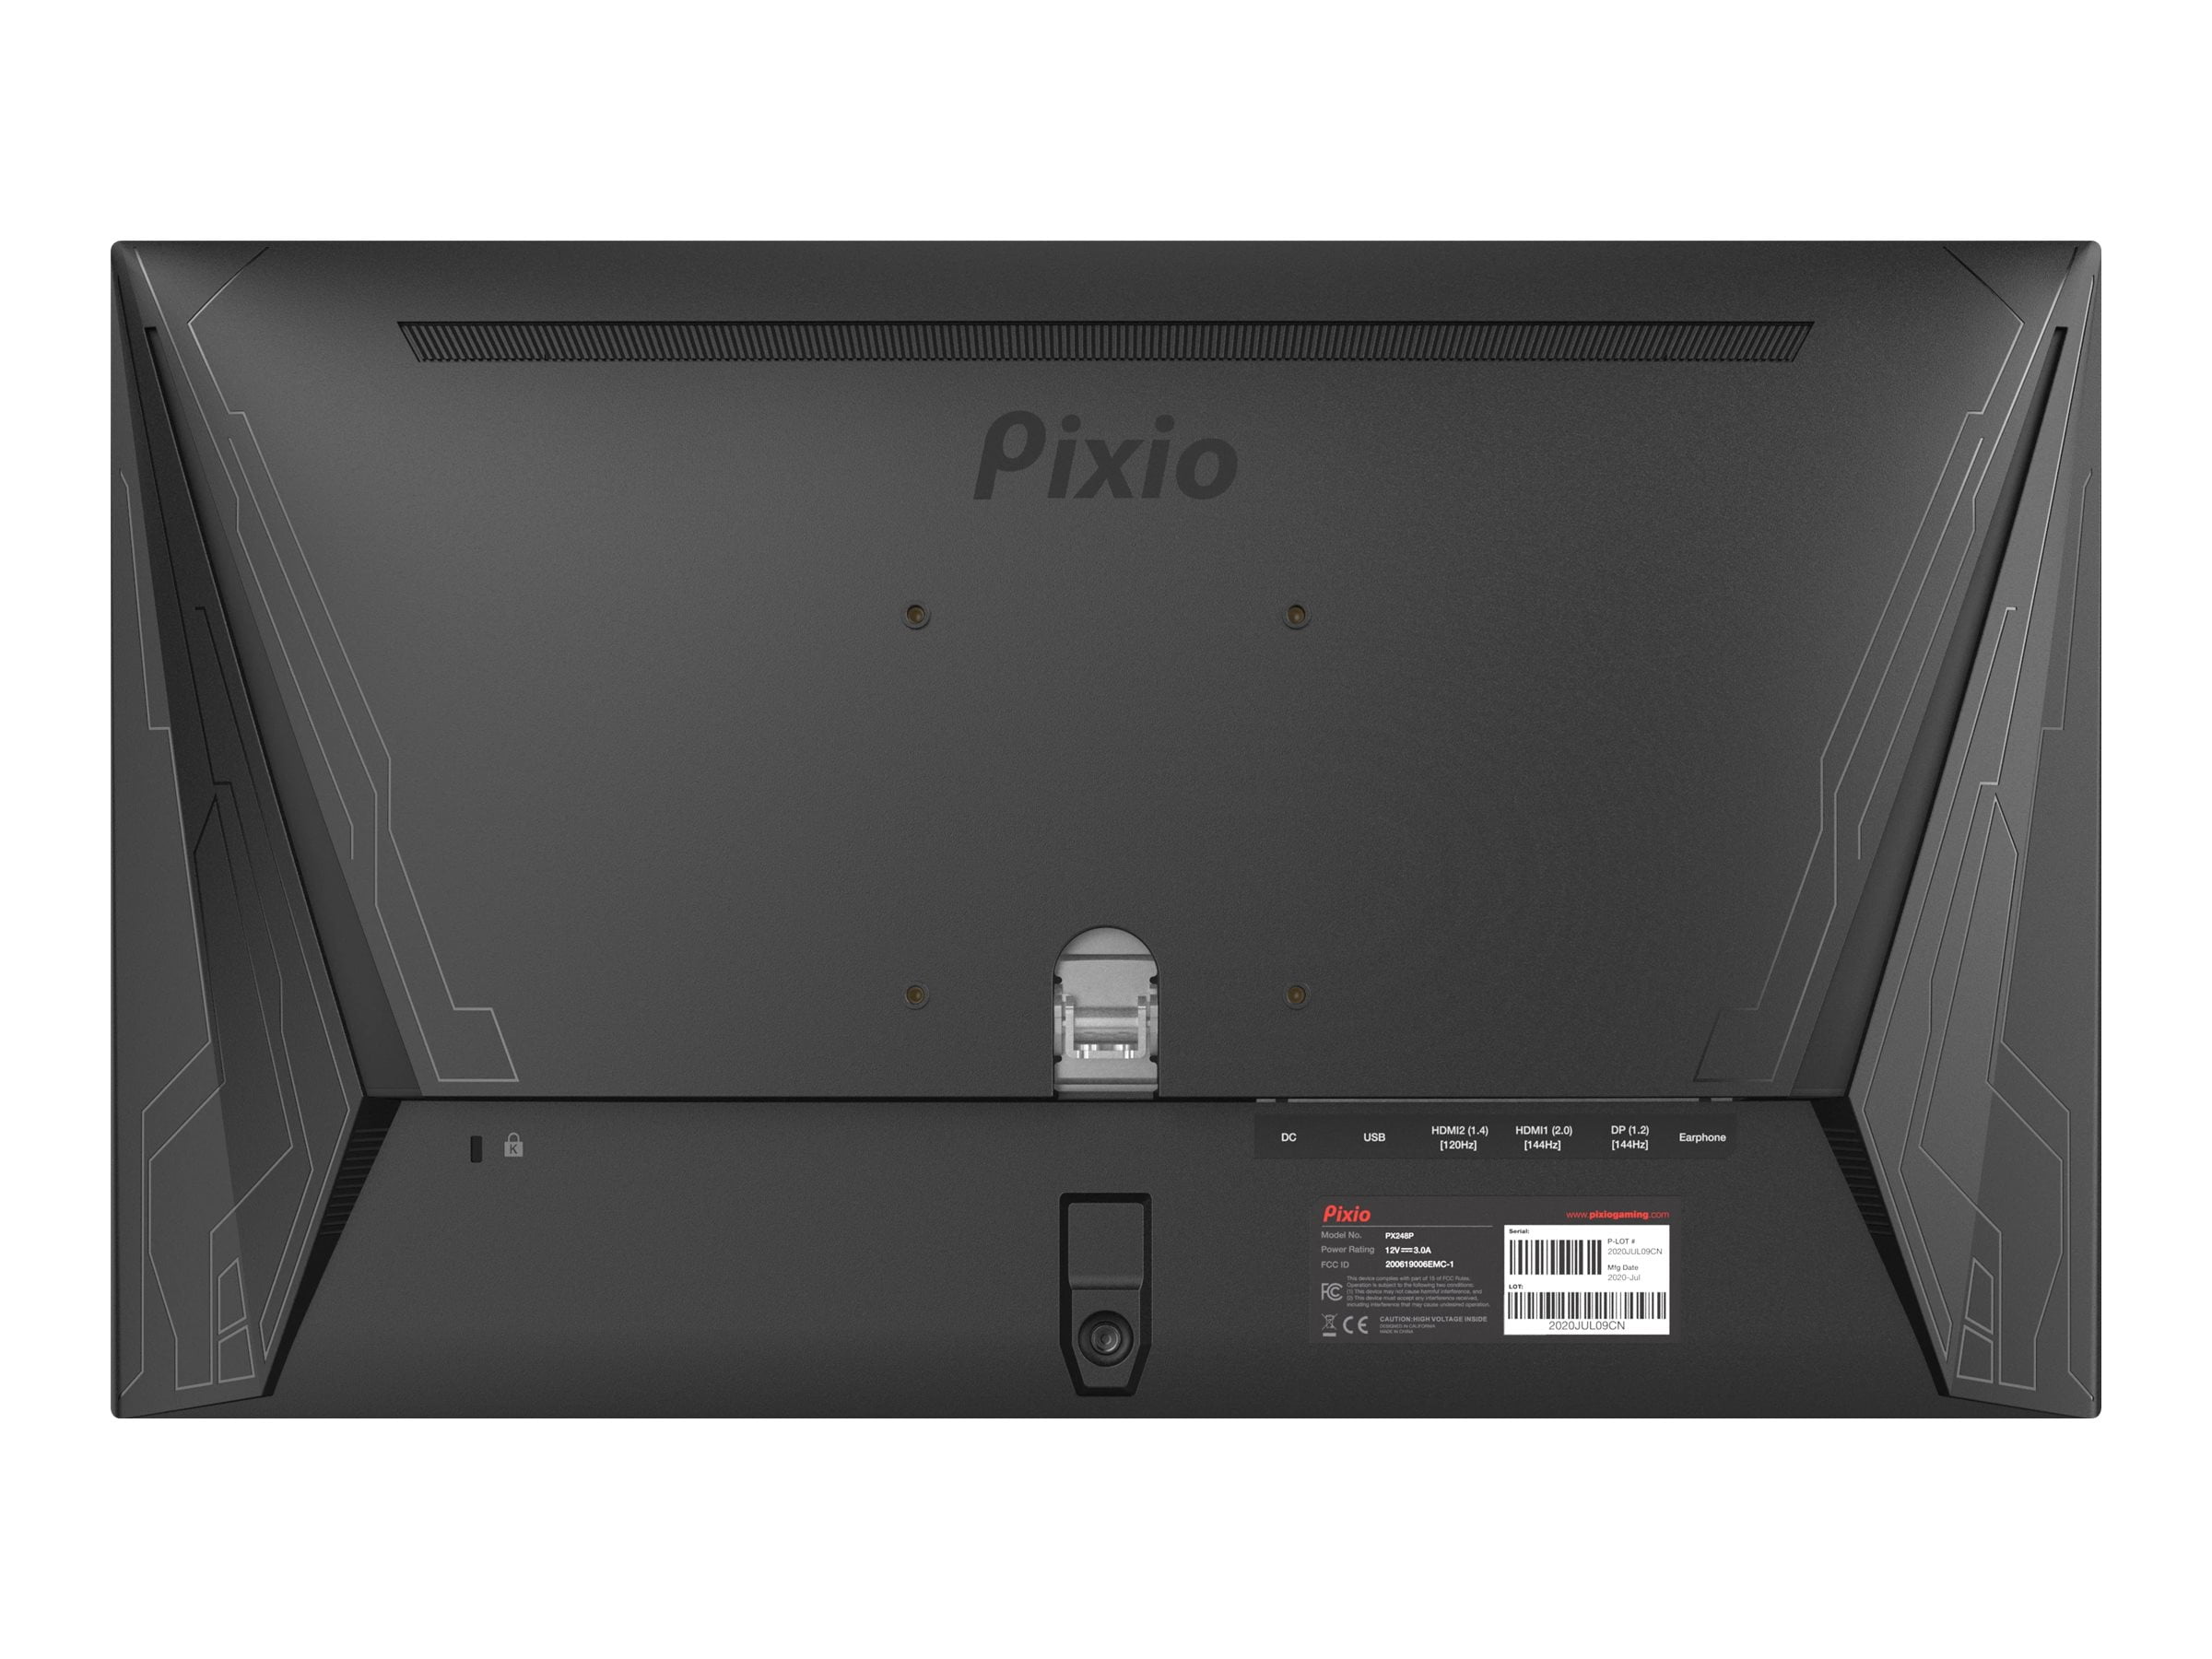 Pixio PX248 Prime 24 inch 144Hz IPS 1ms FHD 1080p AMD Radeon FreeSync  Esports IPS Gaming Monitor